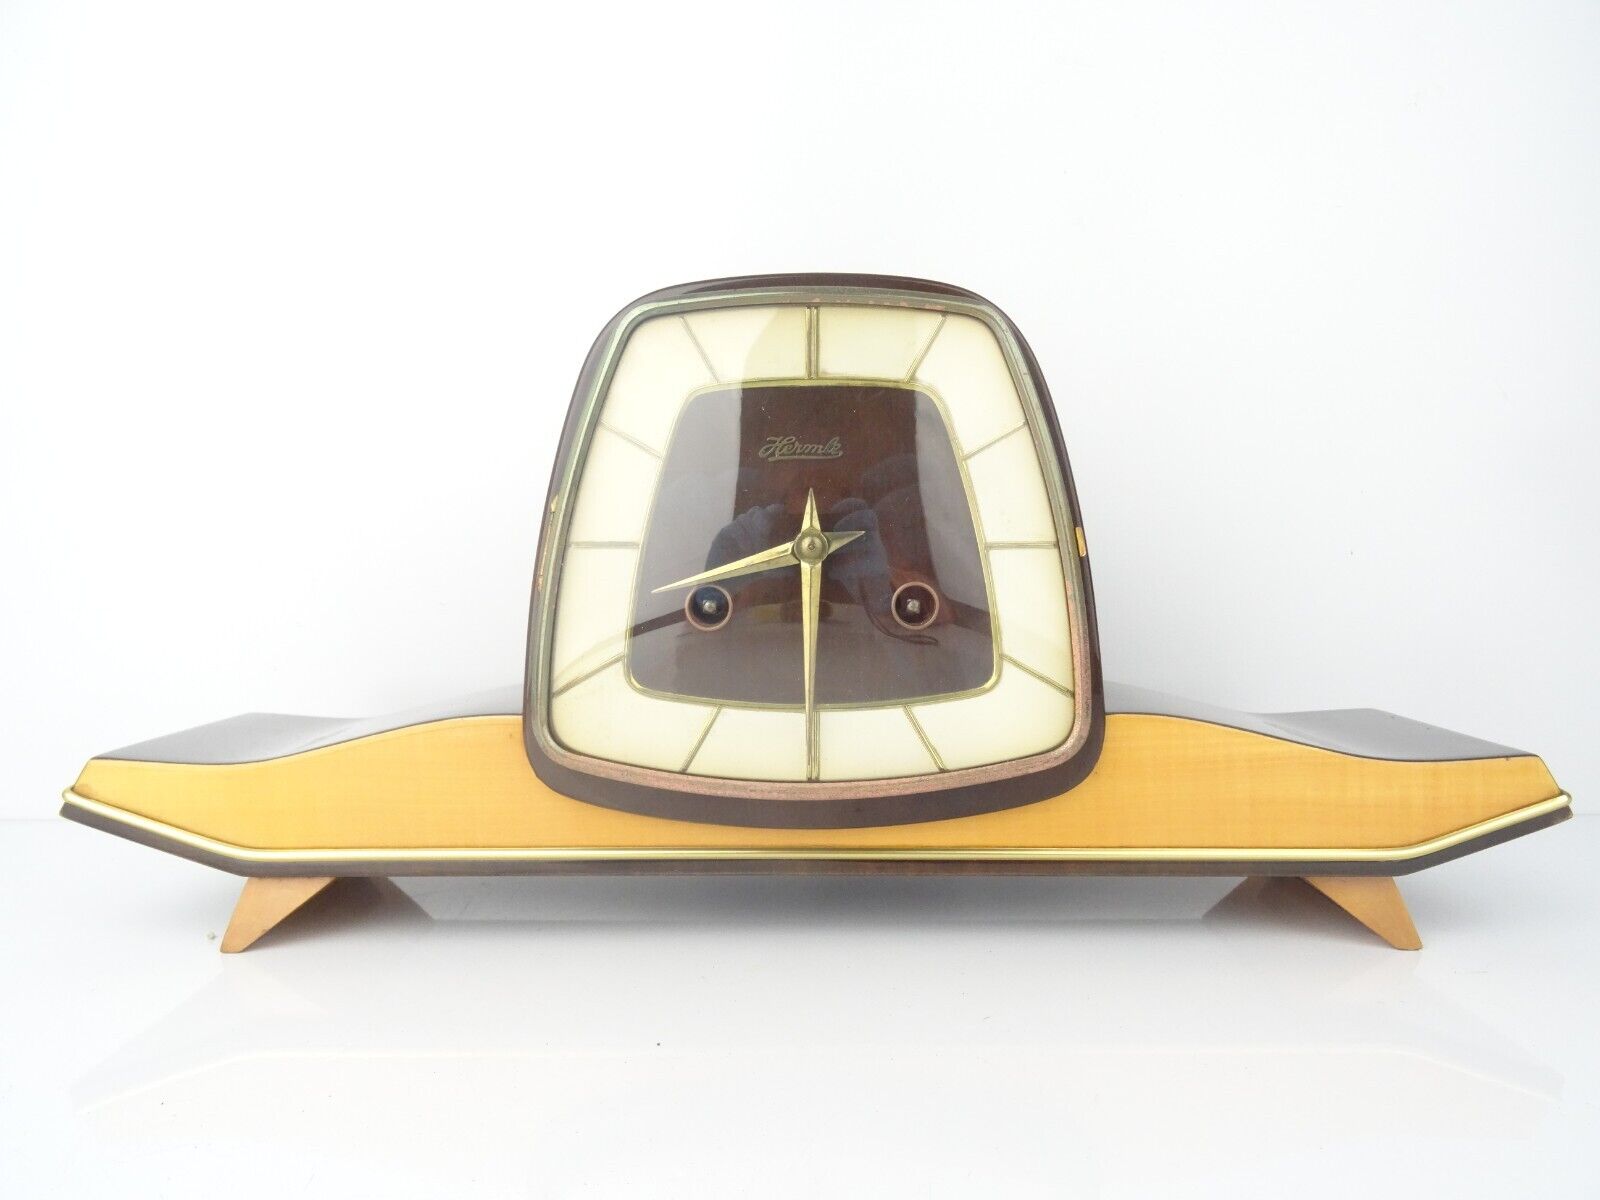 German Vintage HERMLE HIGH GLOSS Design Mid Century 8 day Retro Mantel Clock